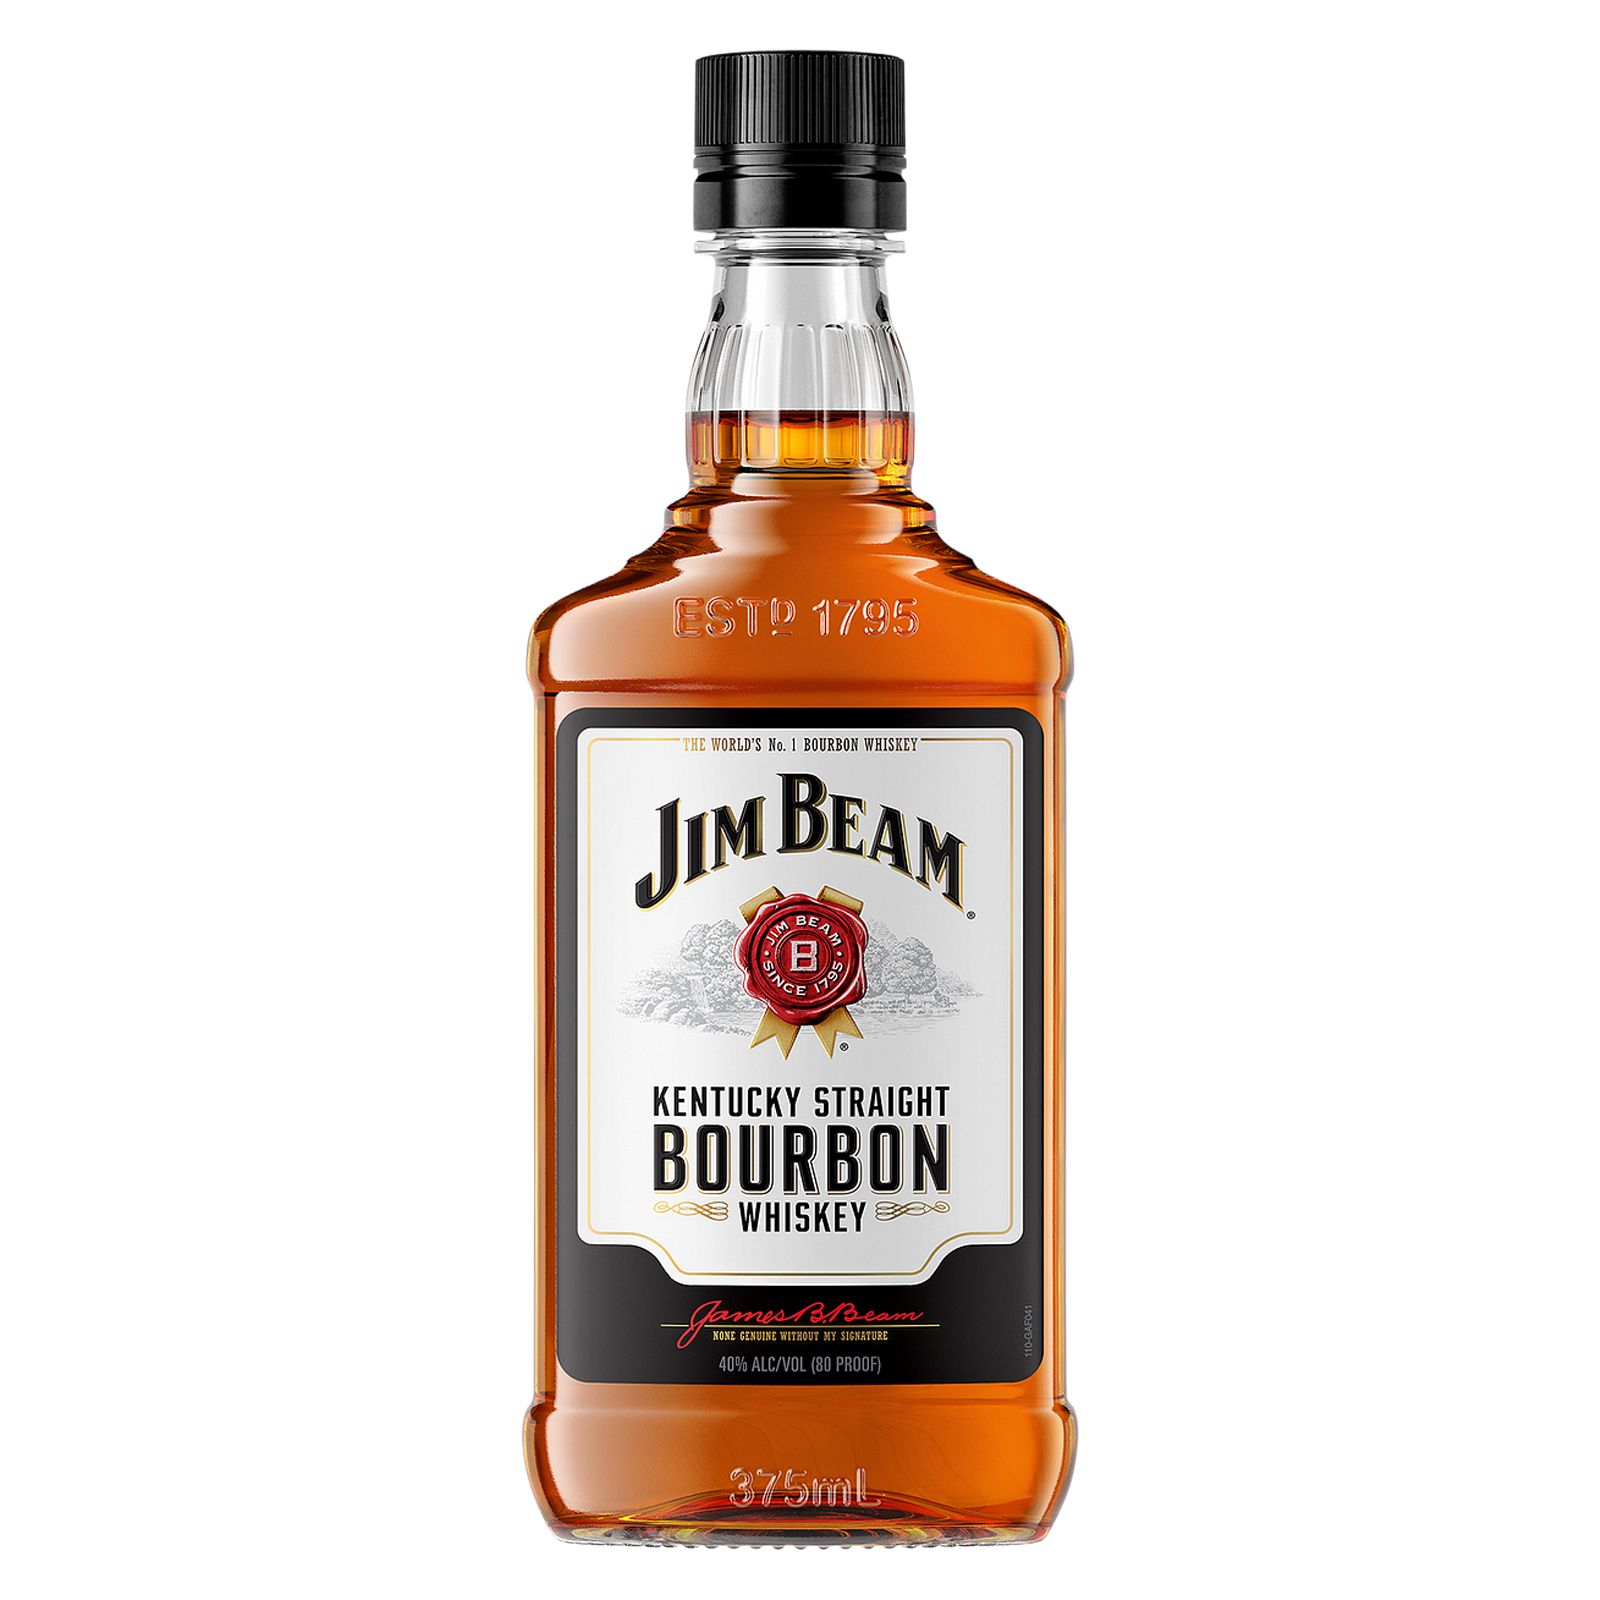 Jim Beam Bourbon Whiskey 375ml PET (80 Proof)